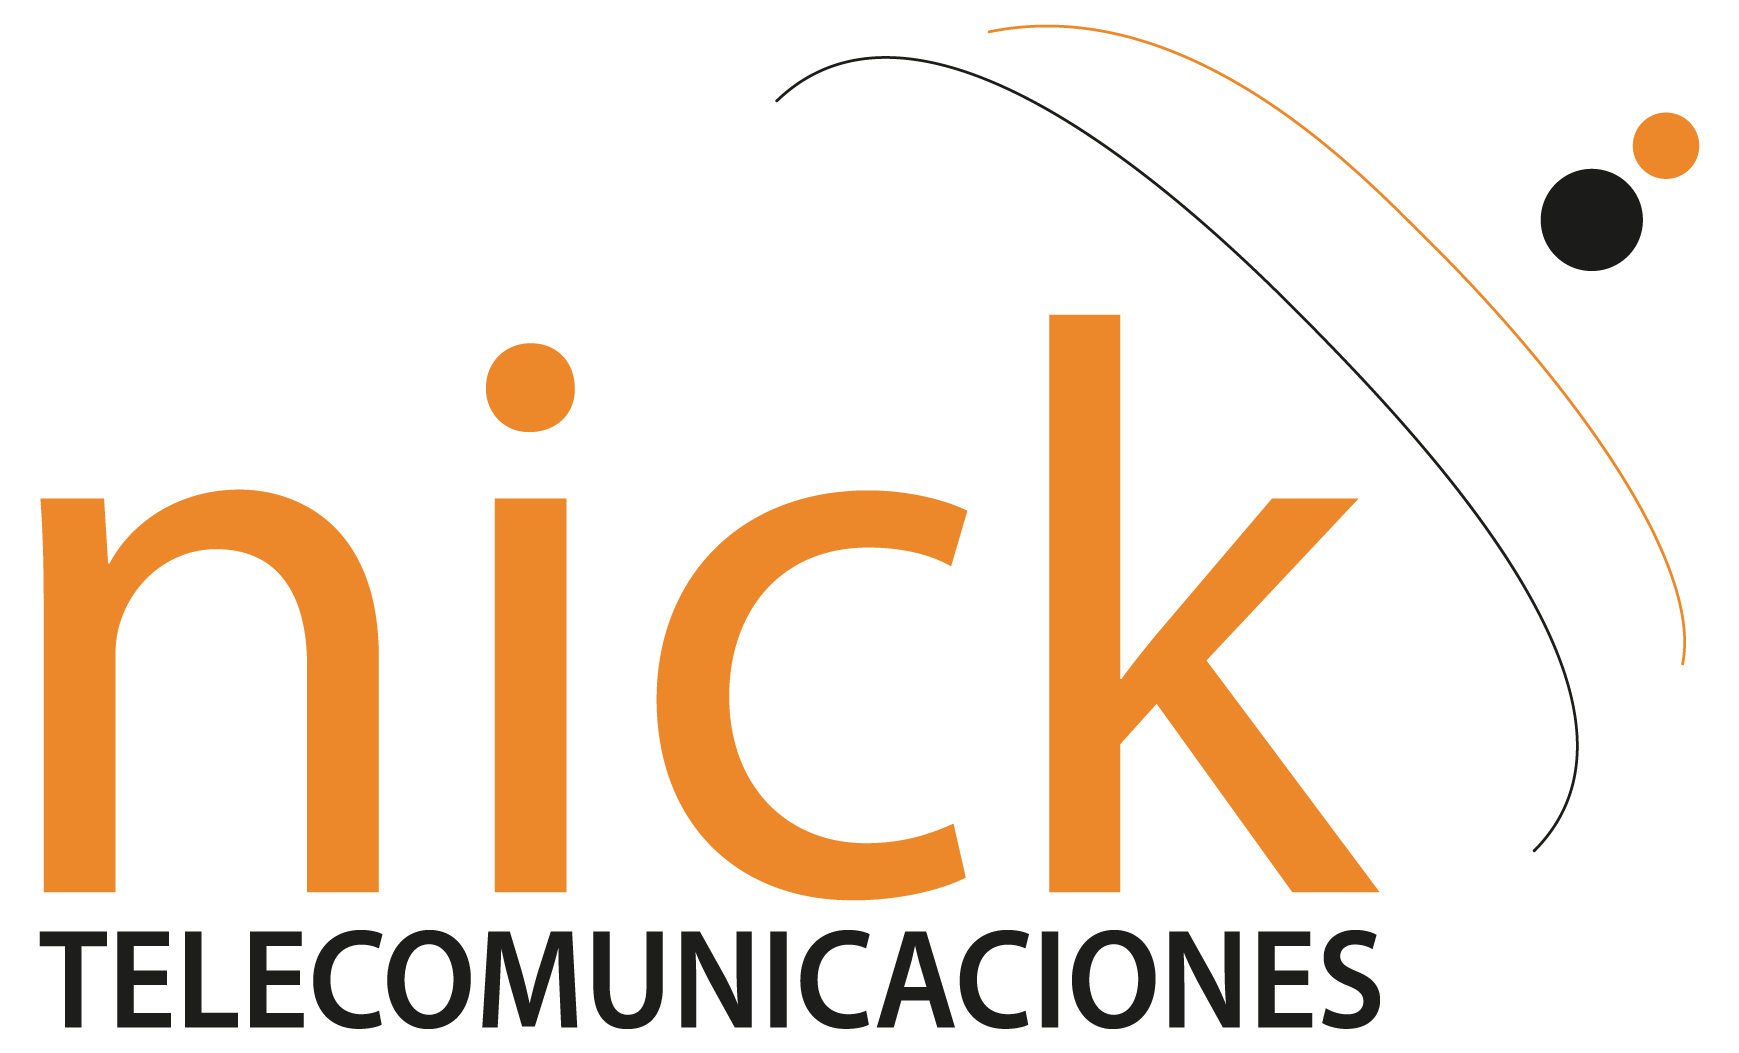 NIck Telecomunicaciones